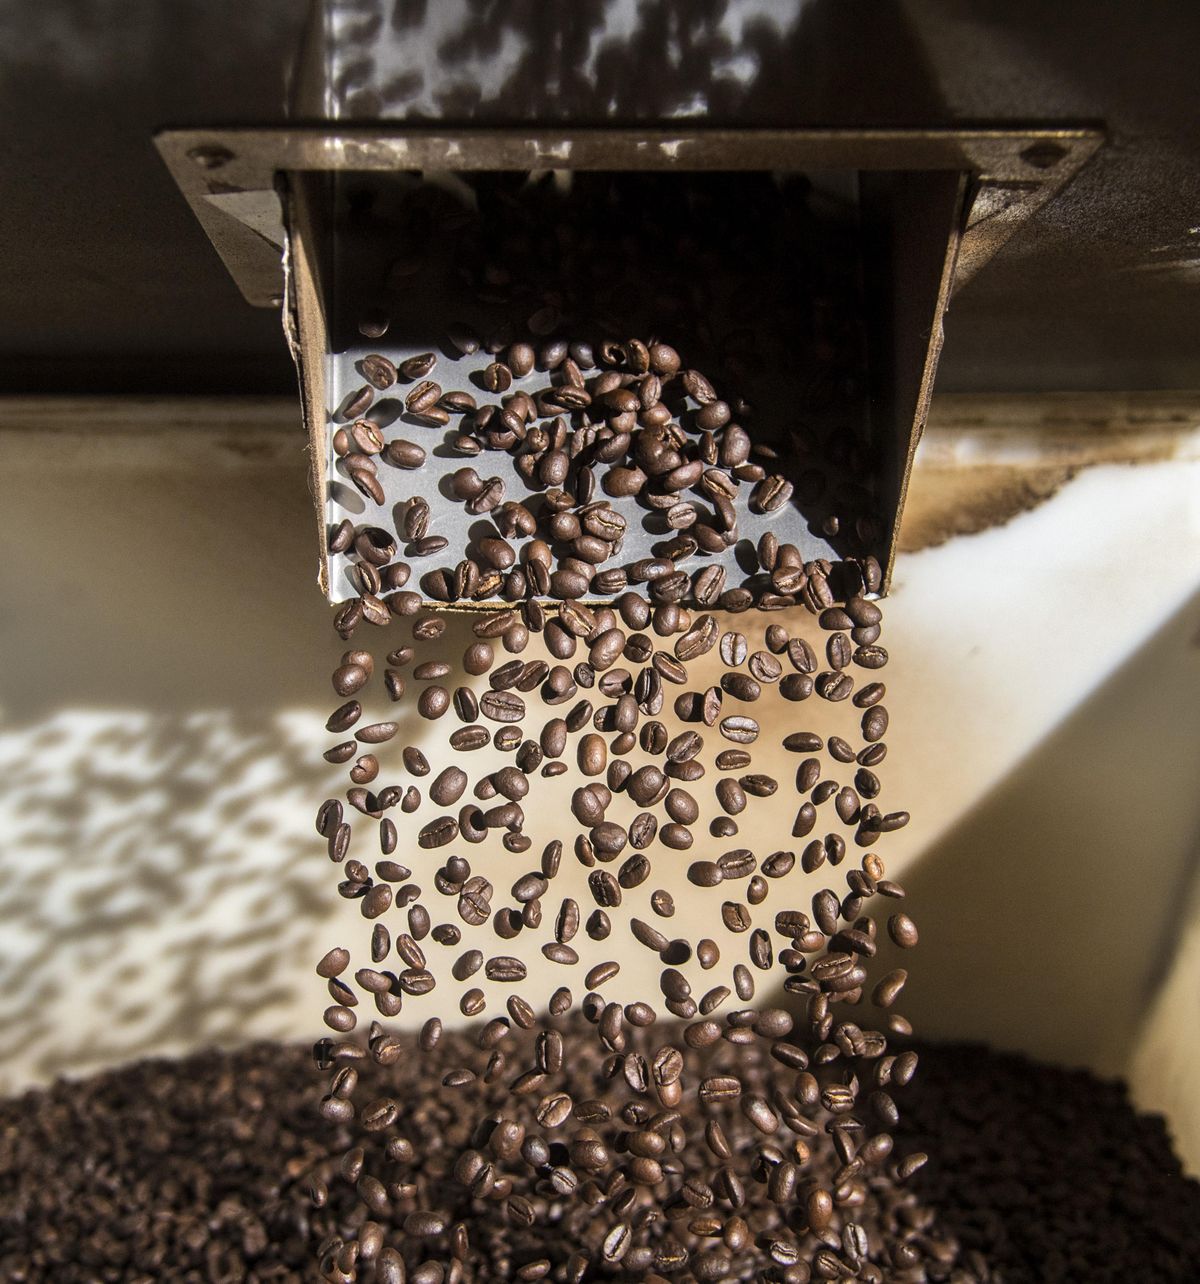 Roasted coffee beans tumble into a catch bin, Friday, Jan. 12, 2018, at 4 Seasons Coffee in Spokane, Wash. (Dan Pelle / The Spokesman-Review)